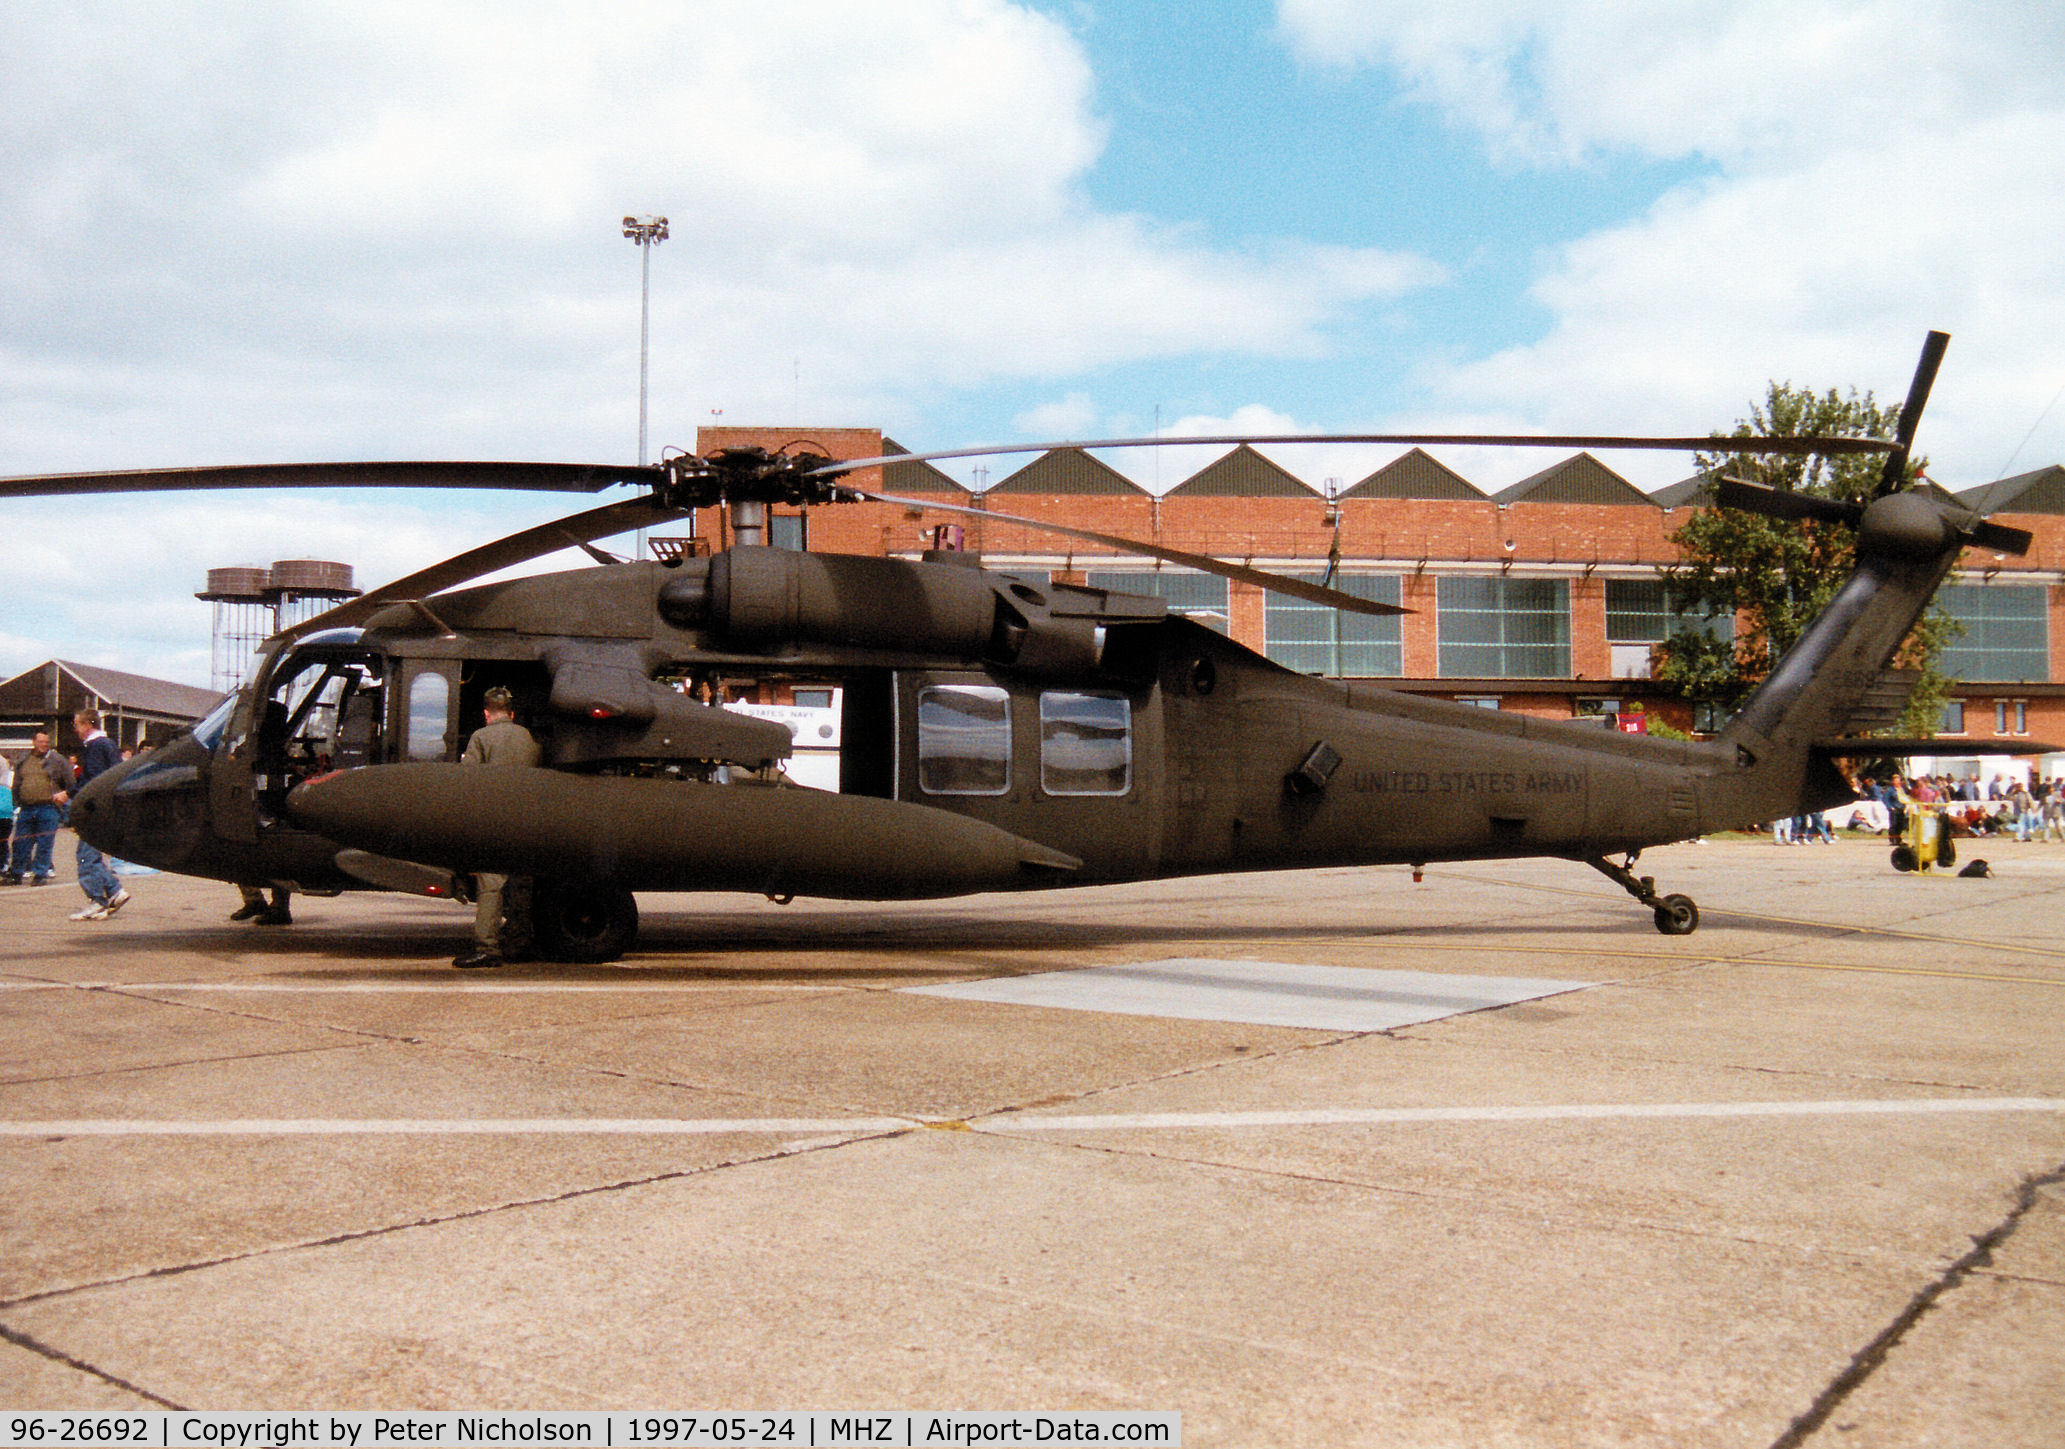 96-26692, 1996 Sikorsky UH-60L Black Hawk C/N 70-2225, UH-60L Black Hawk of the US Army's 158th Aviation Regiment on display at the 1997 RAF Mildenhall Air Fete.